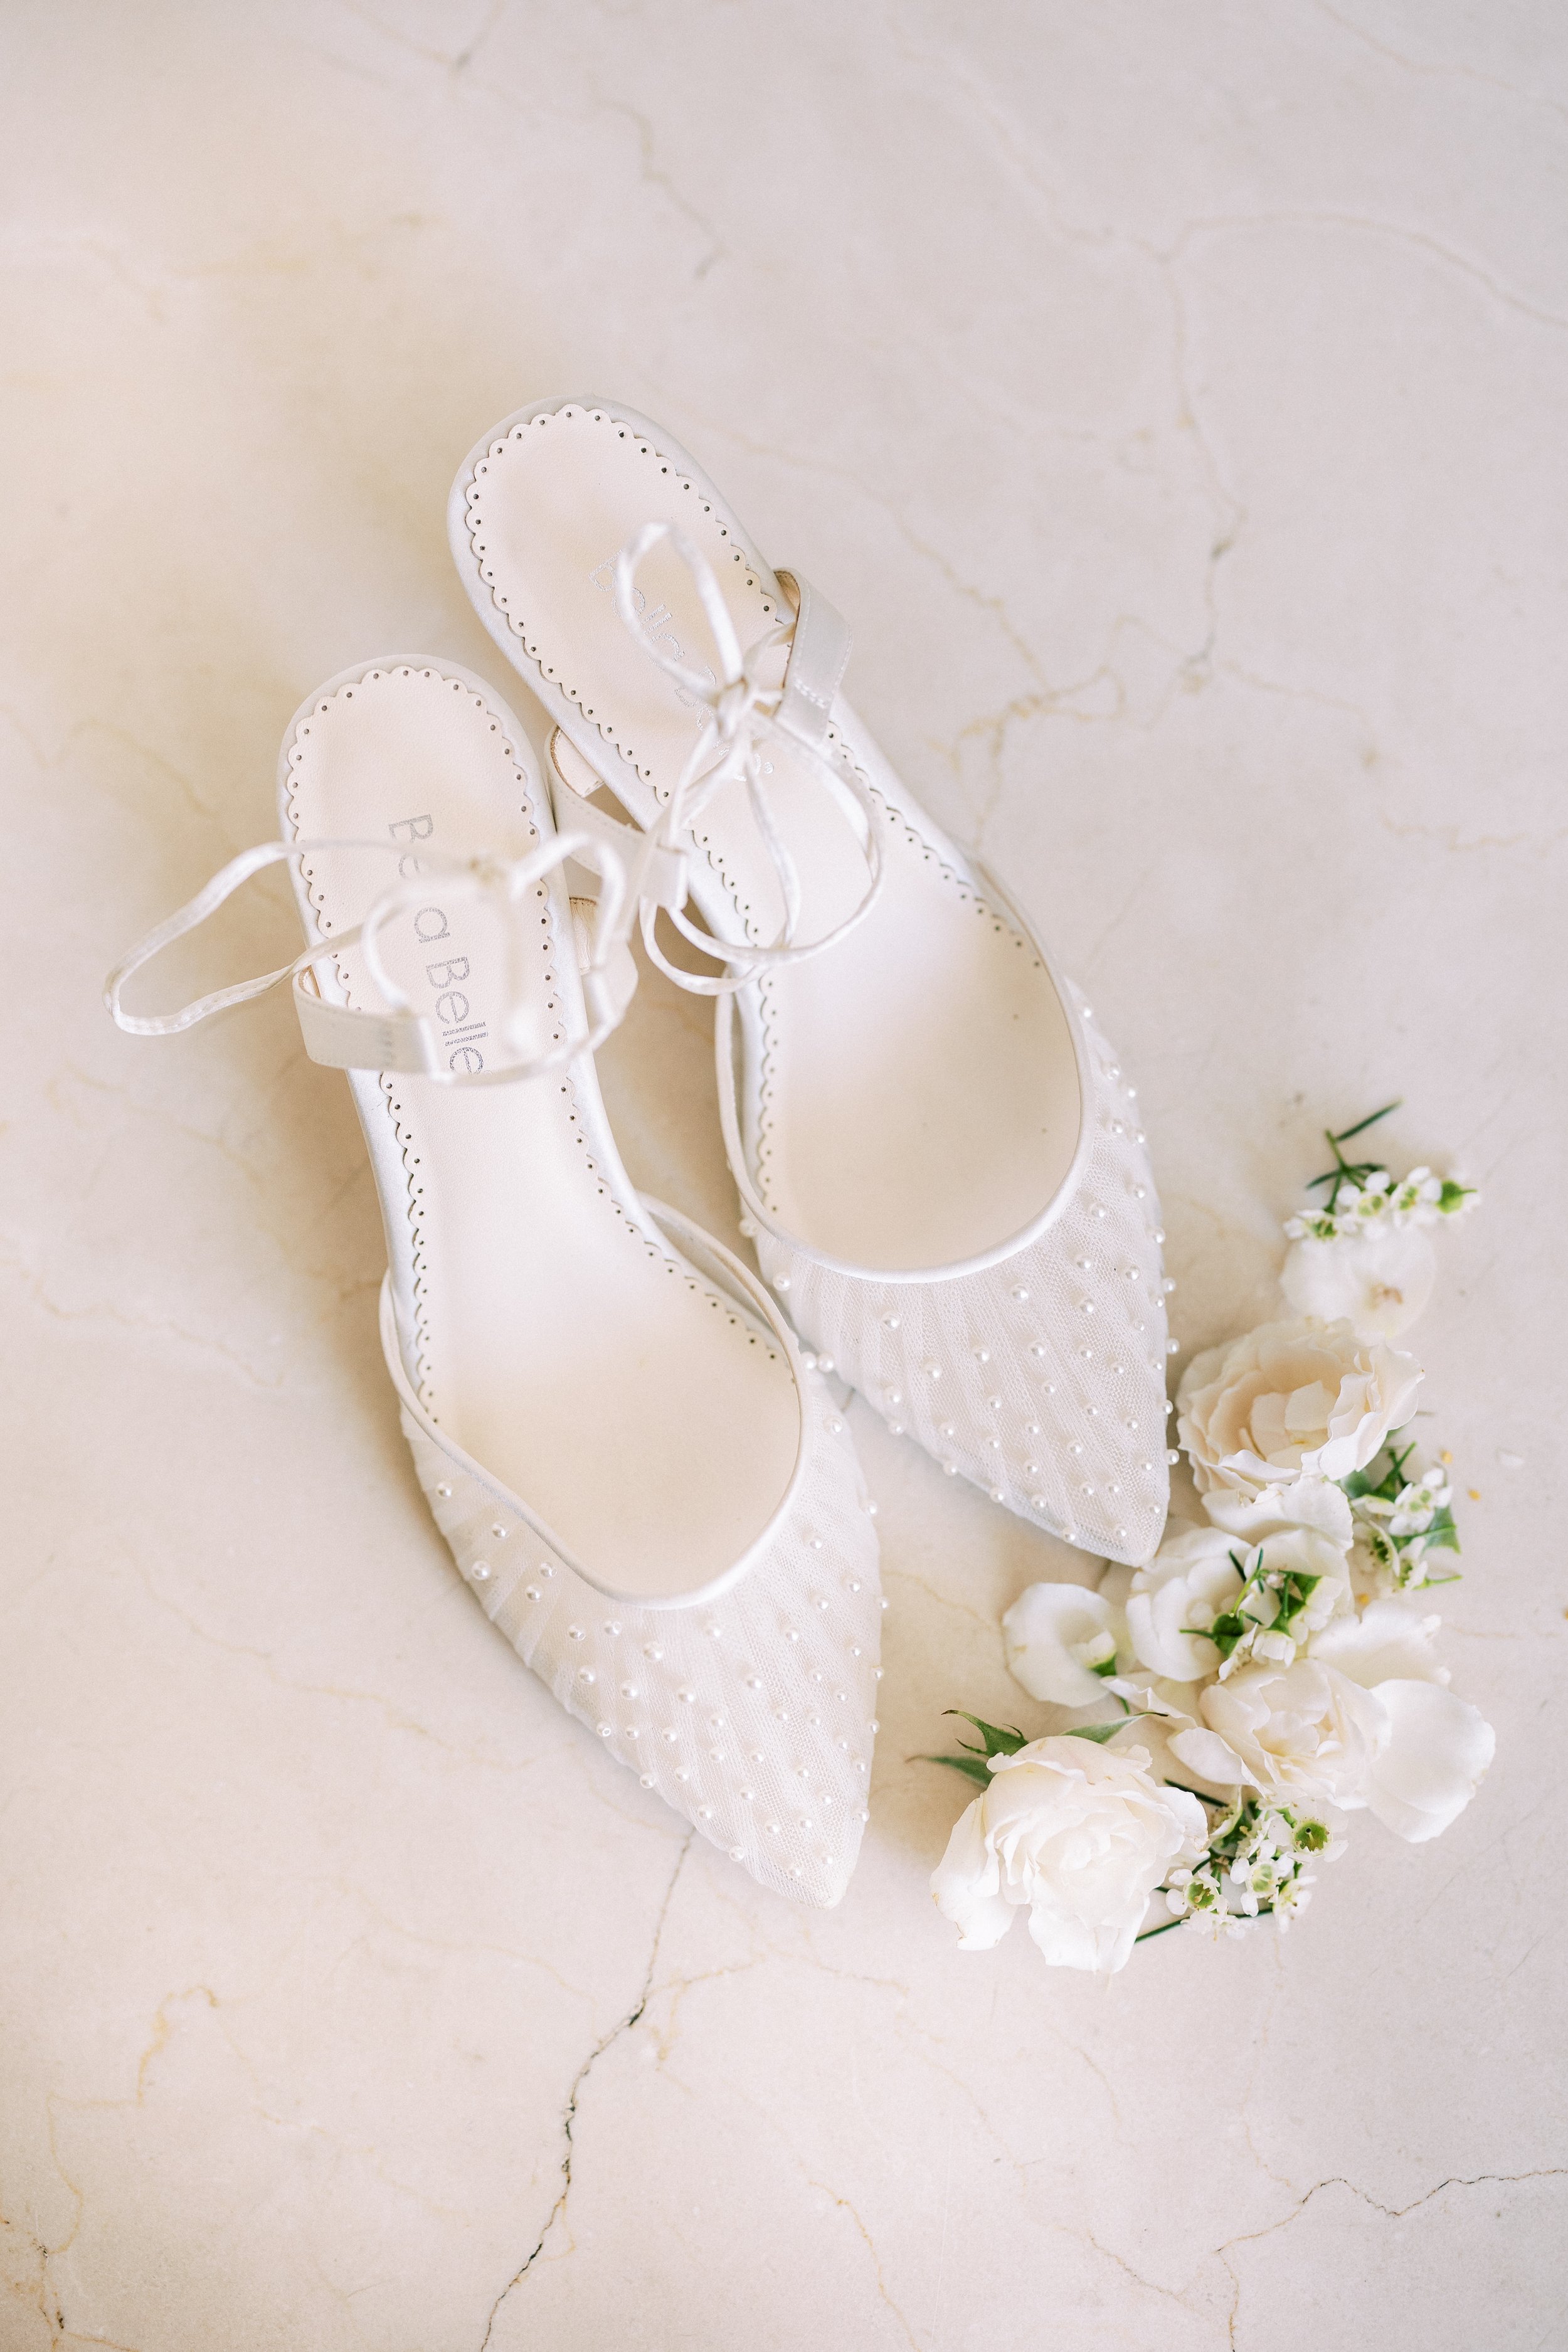 brittany-williams-bella-bell-wedding-shoes.jpg